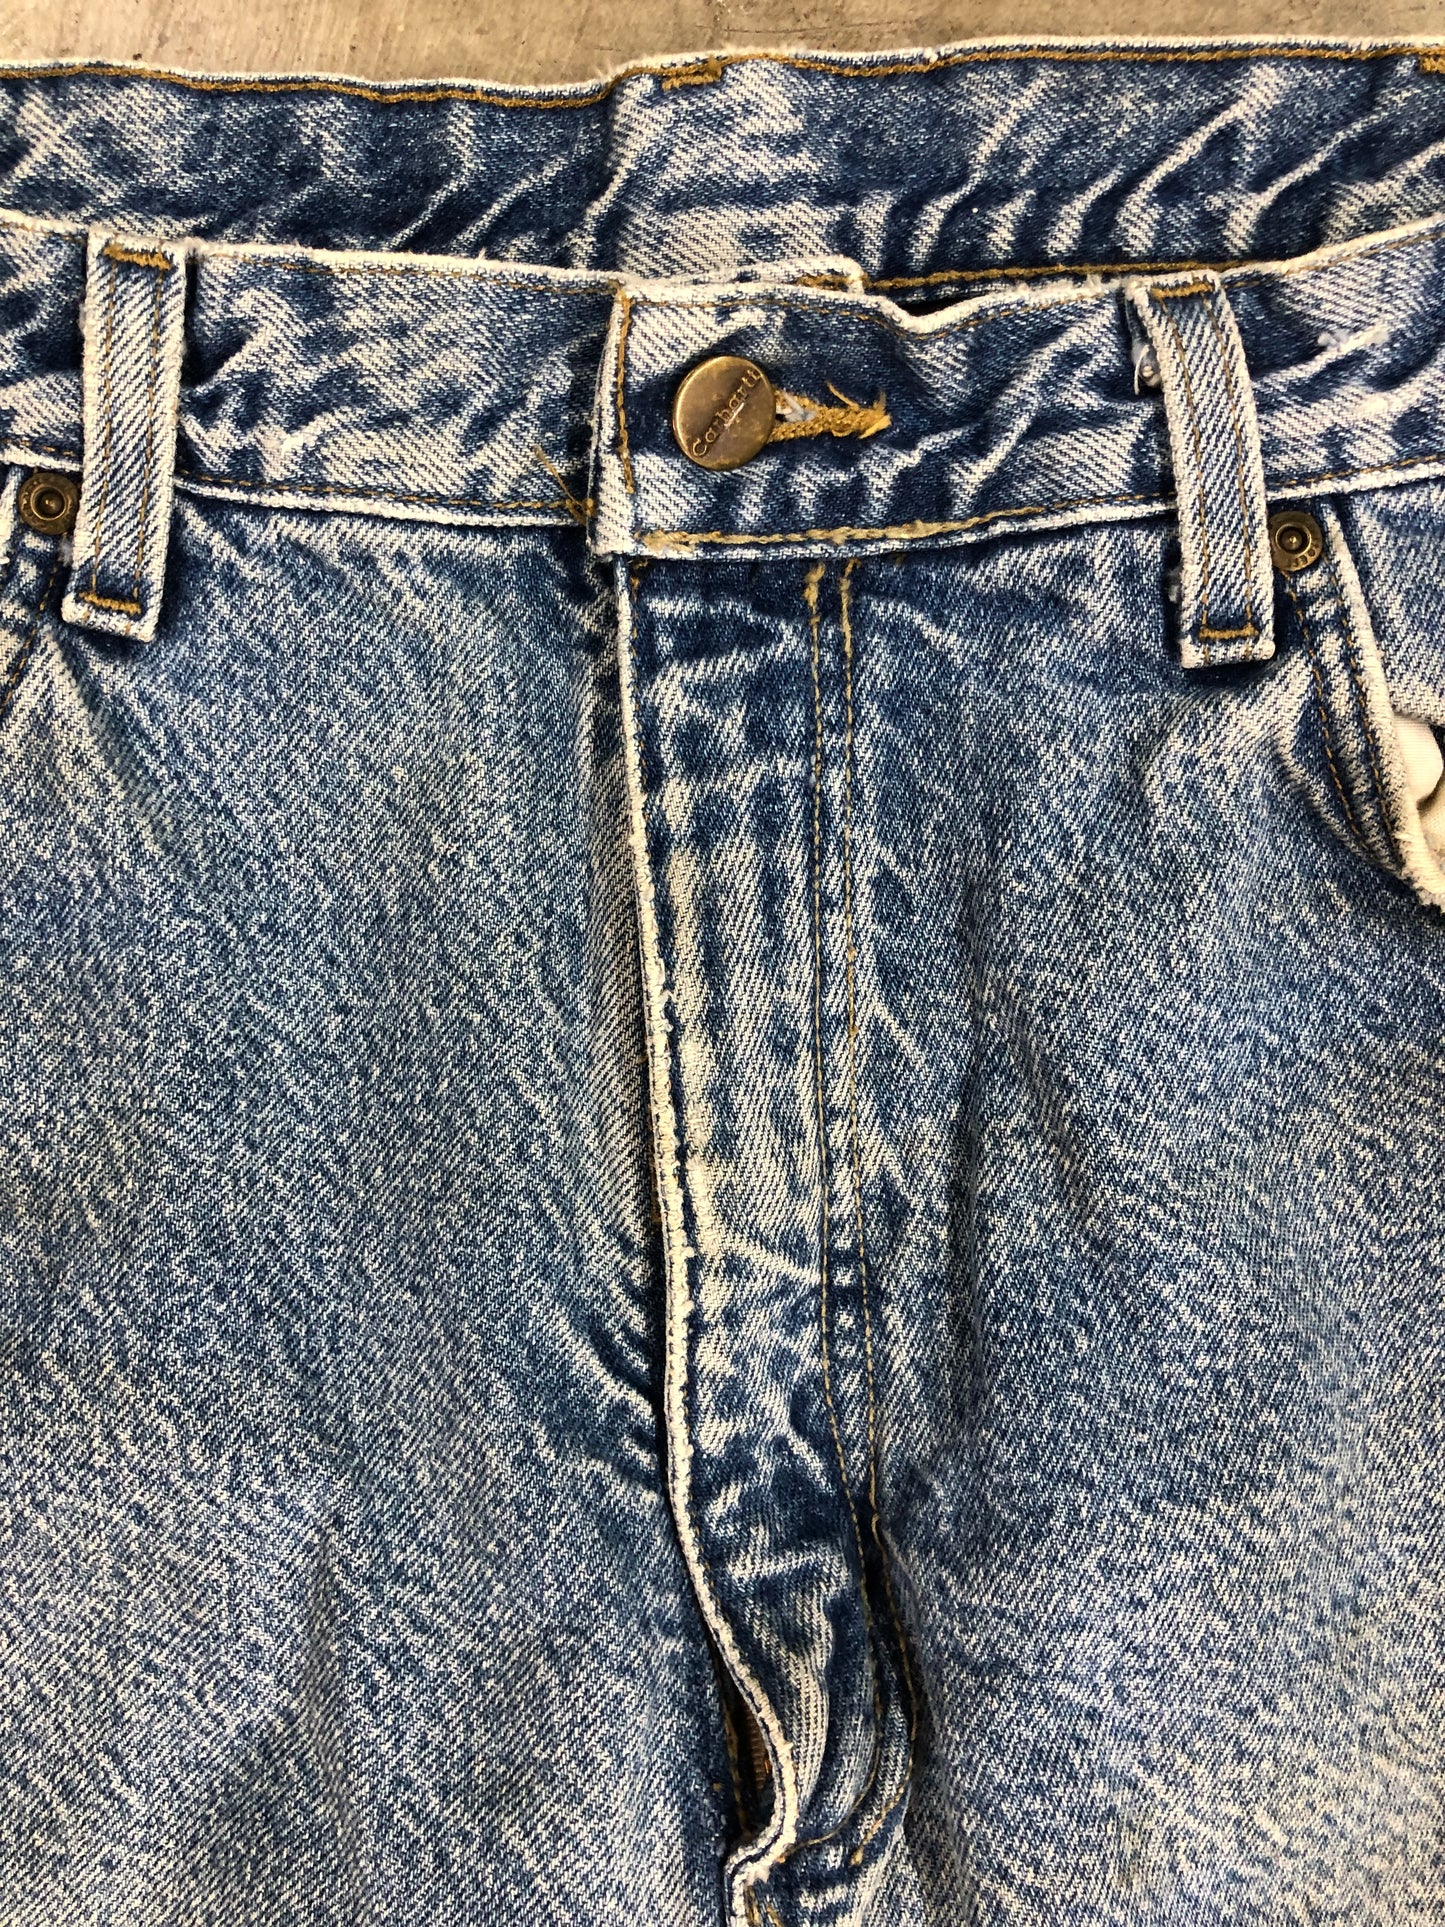 VTG Carhartt Lined Light Wash Jeans Sz 36x32